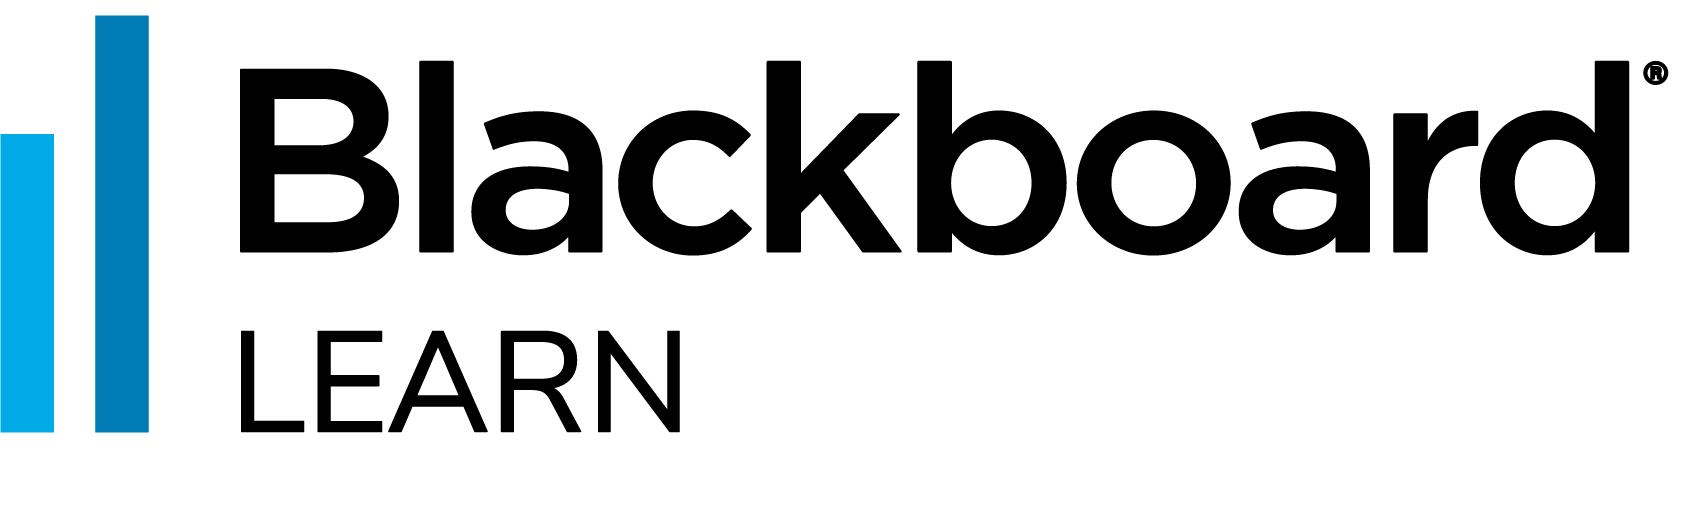 Blackboard Learn logo with trademark